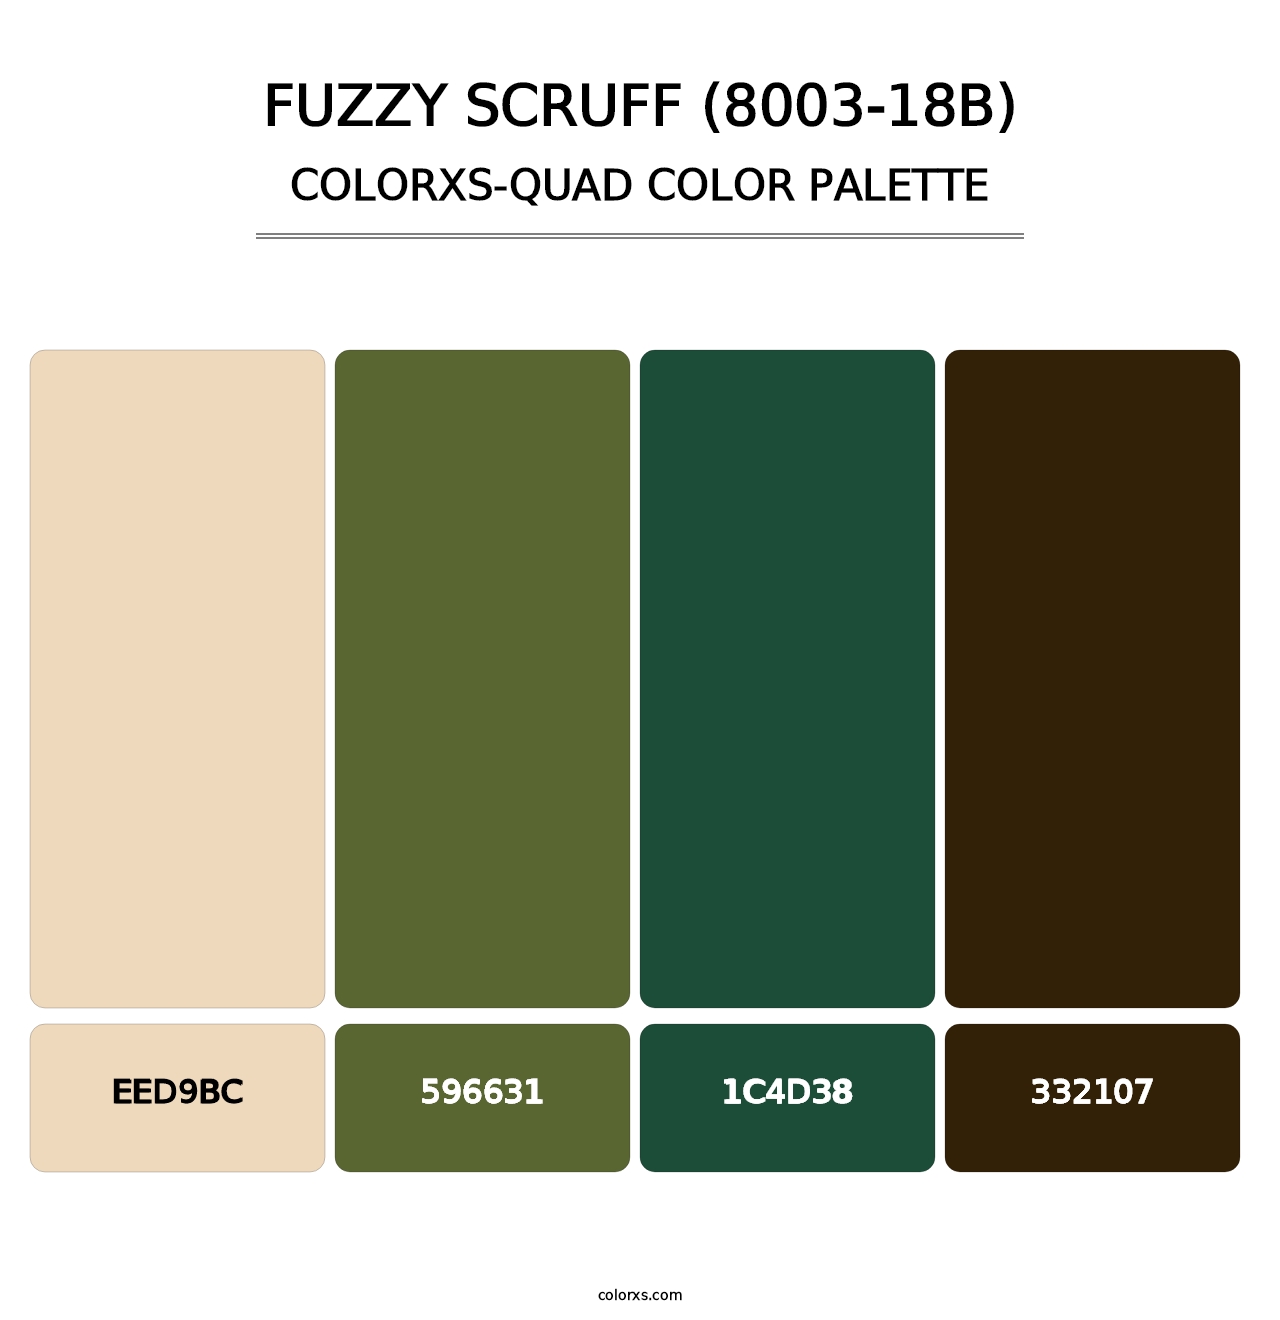 Fuzzy Scruff (8003-18B) - Colorxs Quad Palette